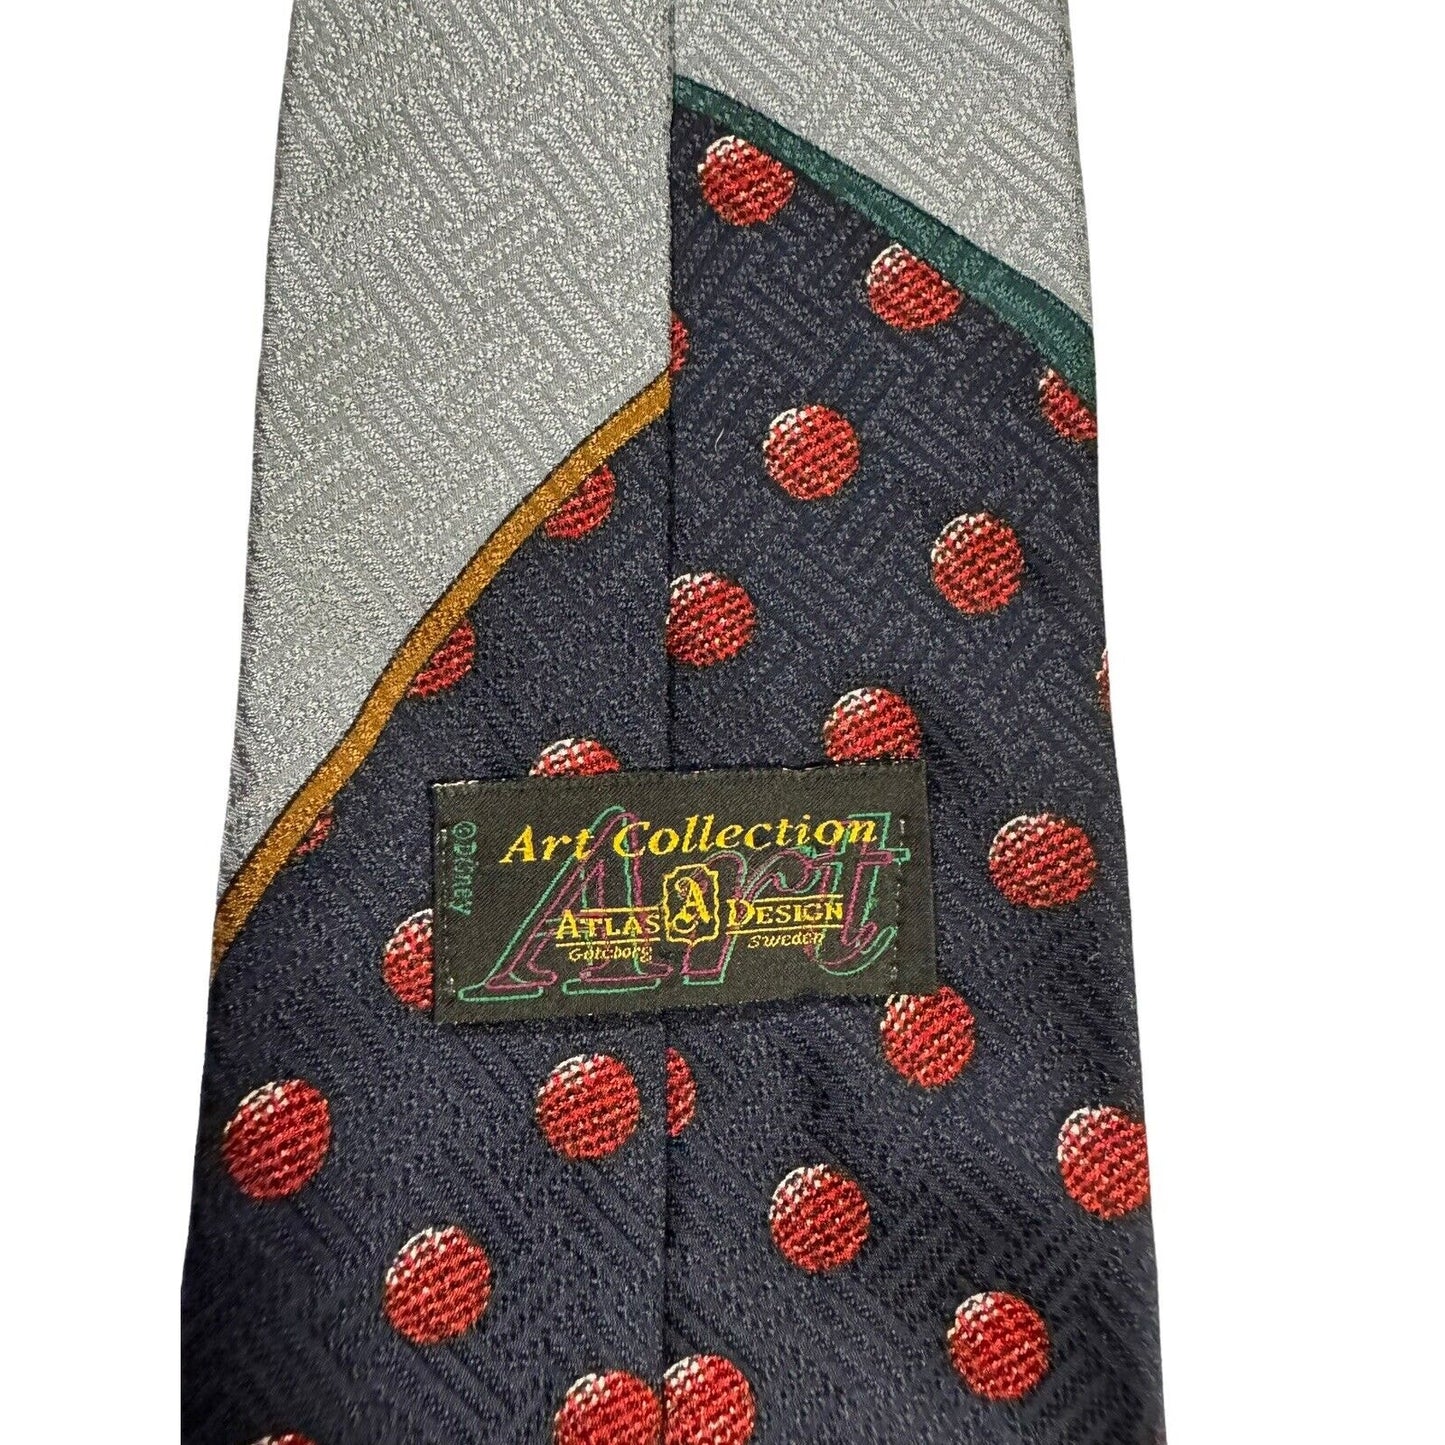 Disney Atlas Designs Art Collection Goofy Golfing Silk Necktie Novelty Vintage